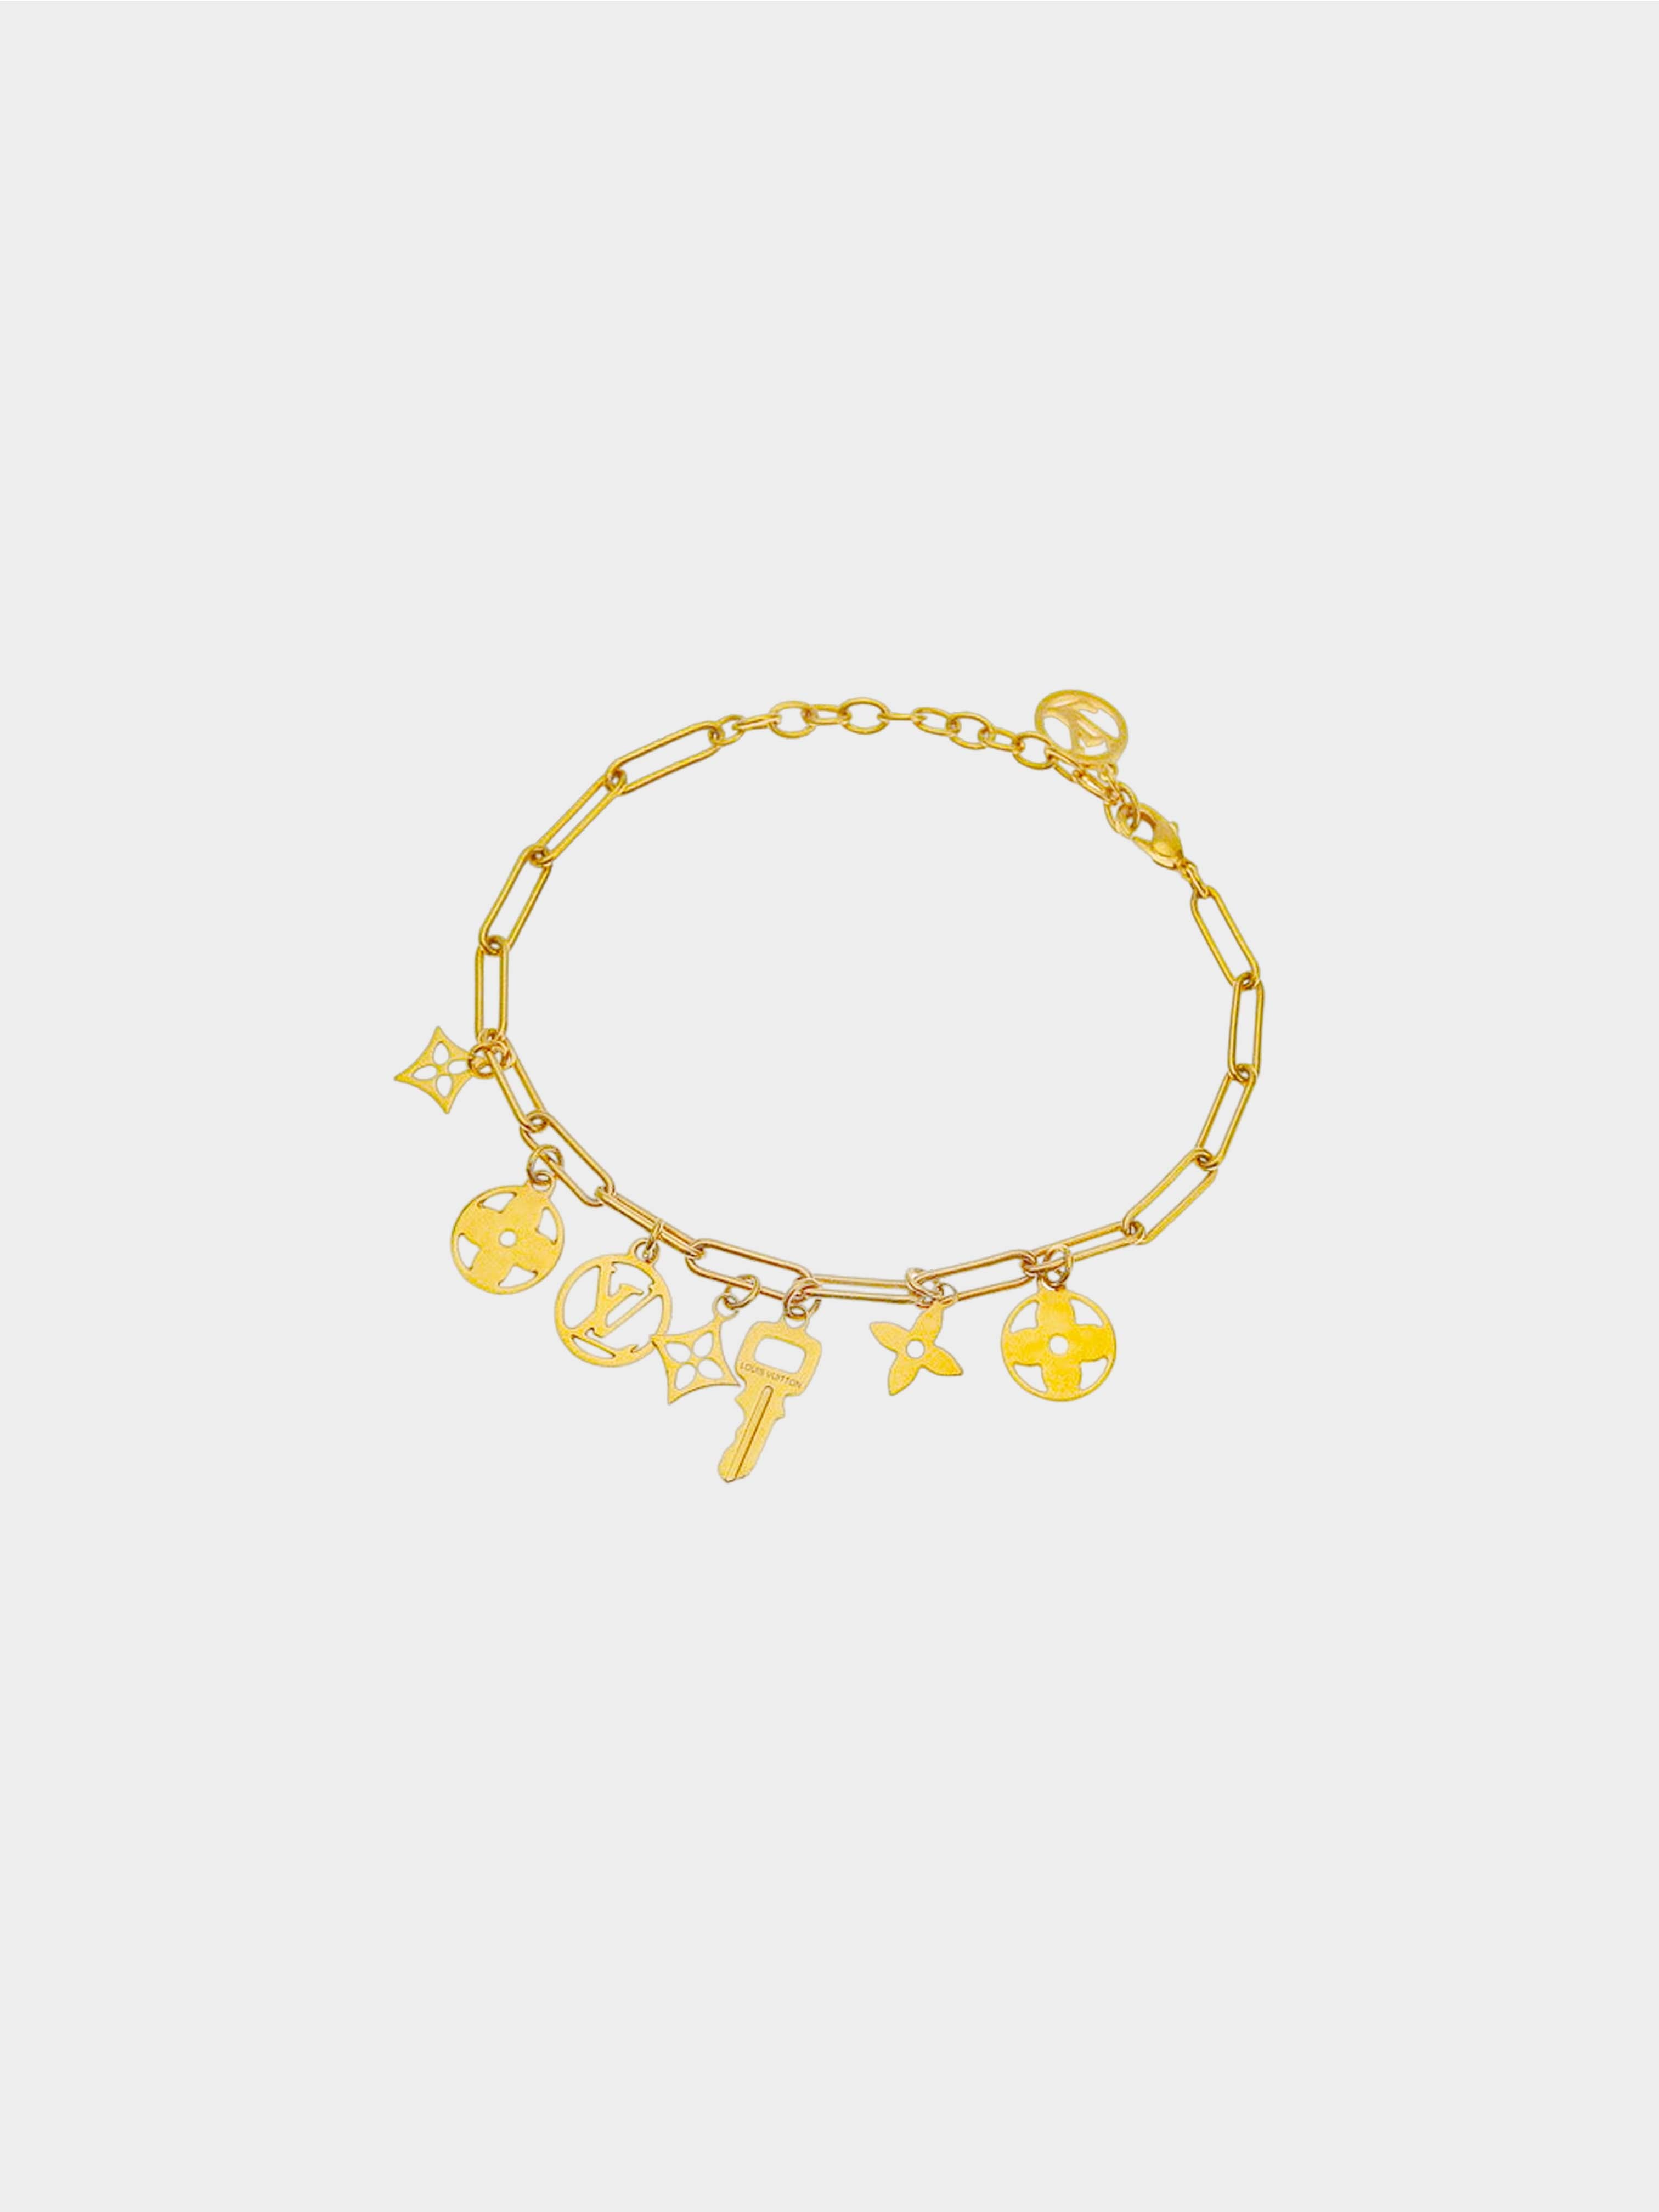 Louis Vuitton 2020 Monogram Roman Holiday Chain Link Bracelet